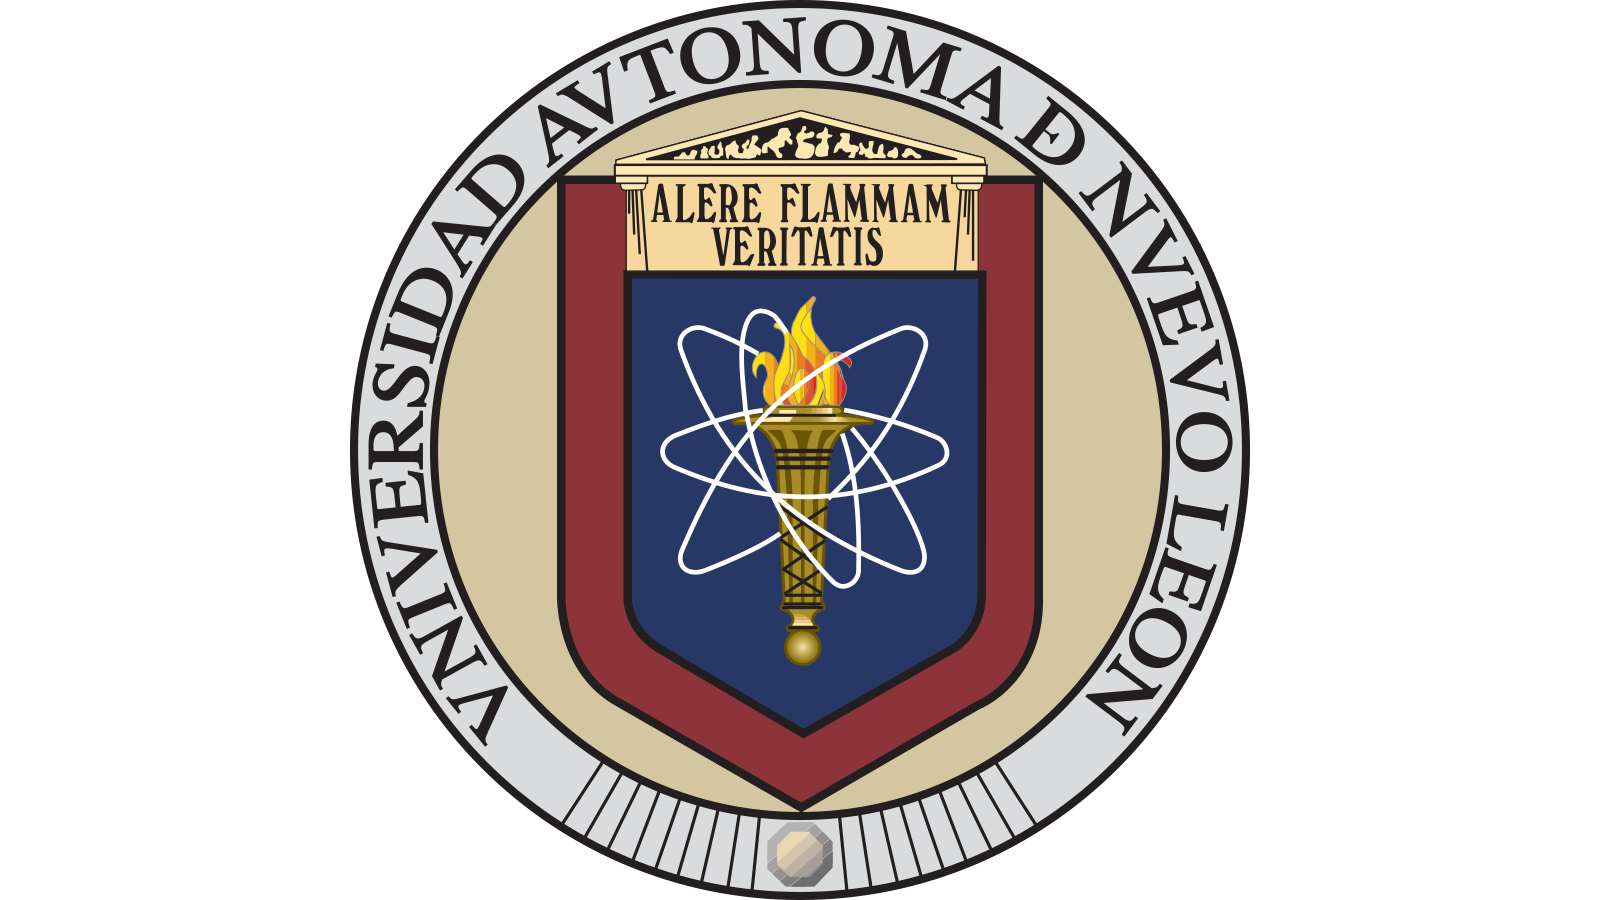 La Universidad Autónoma de Nuevo León logo